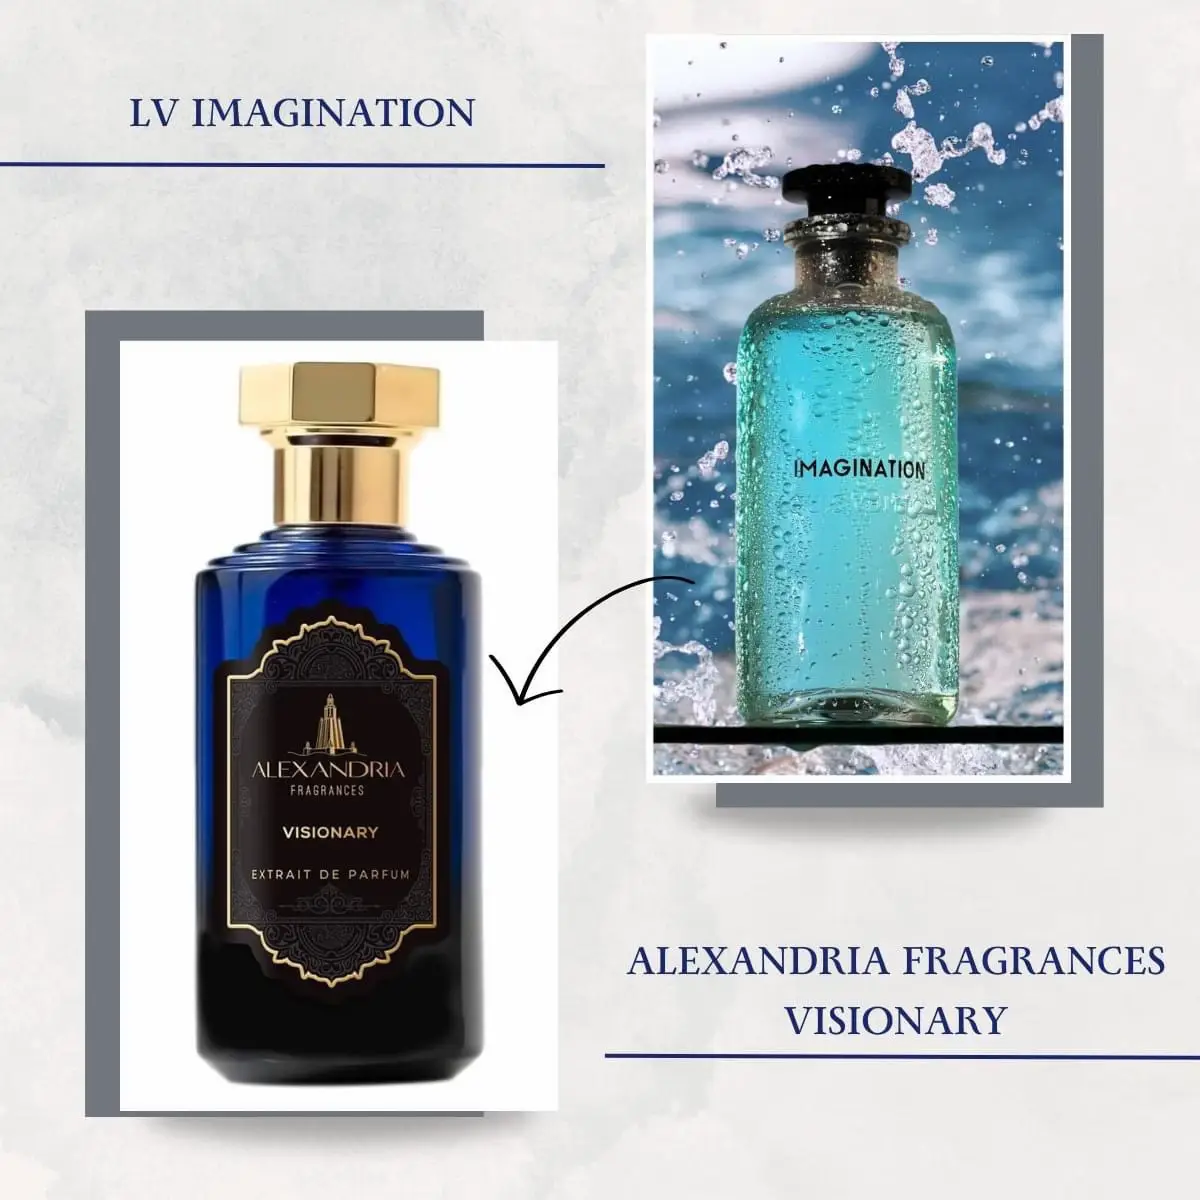 Alexandria Fragrances Visionary // Clone of Louis Vuitton Imagination 